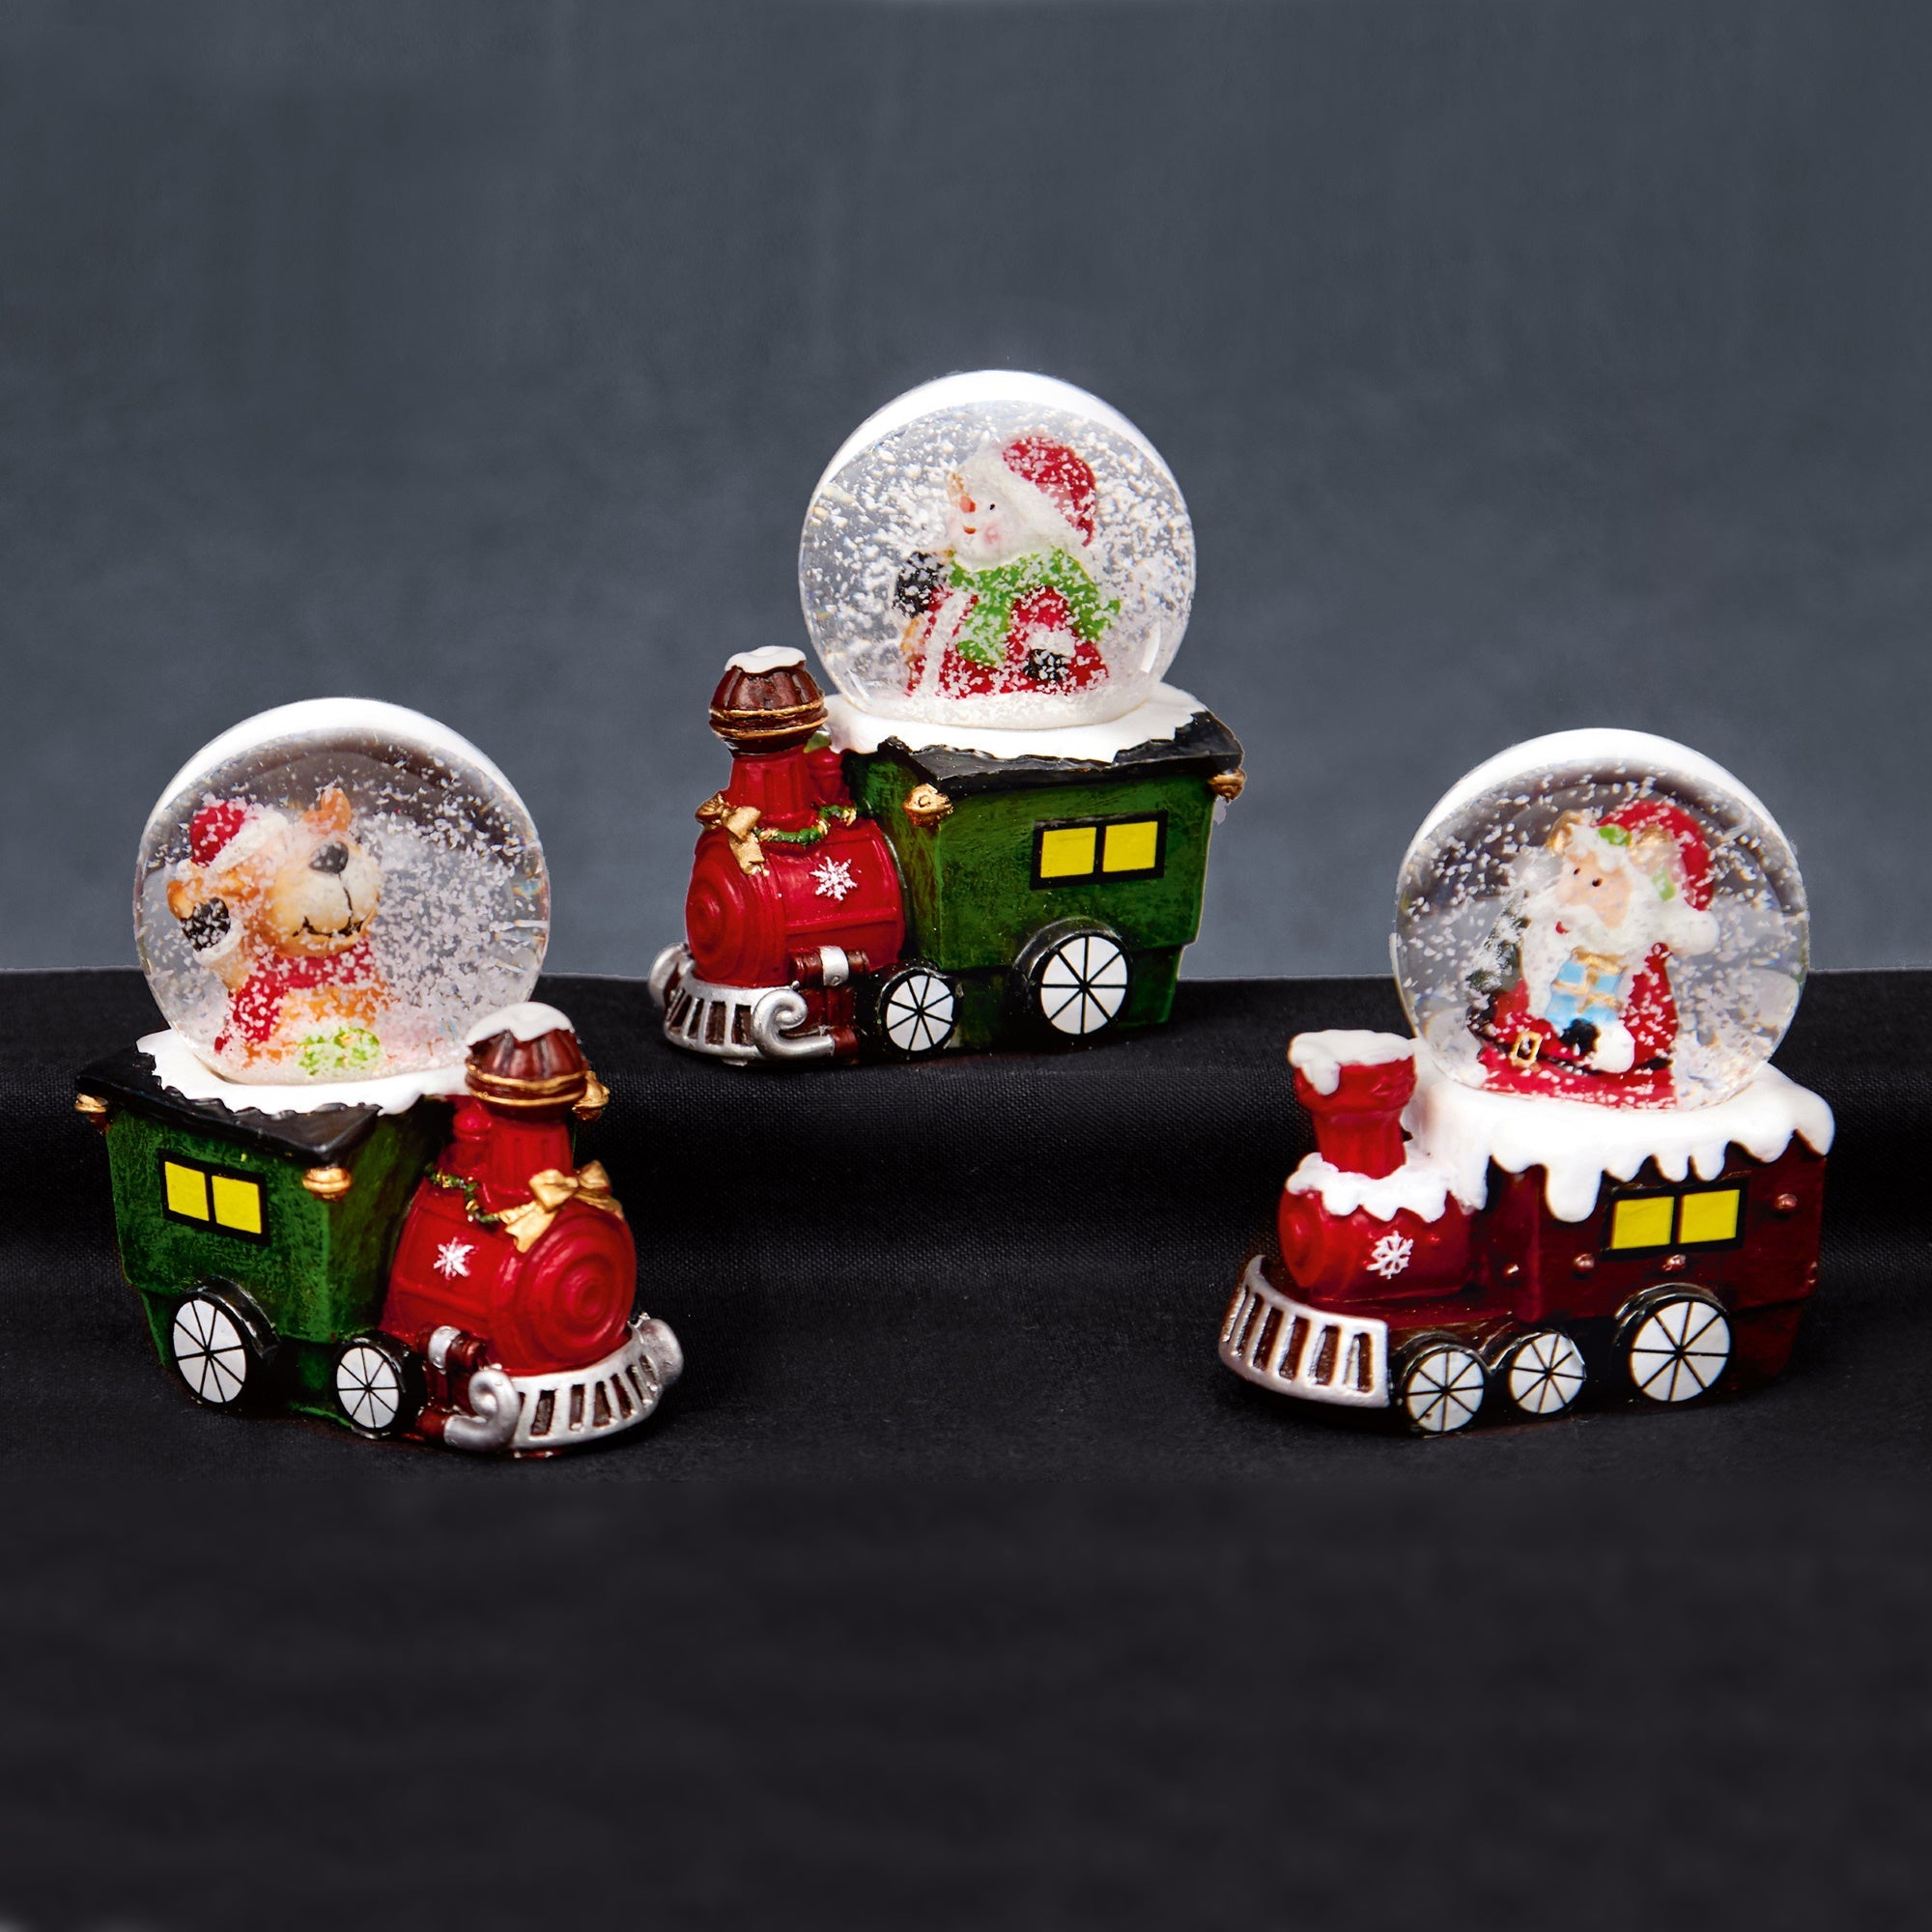 Premier Decorations MO205658 Train Snow Globe 45mm- Various Designs - Premium Christmas Decorations from Premier Decorations - Just $4.99! Shop now at W Hurst & Son (IW) Ltd